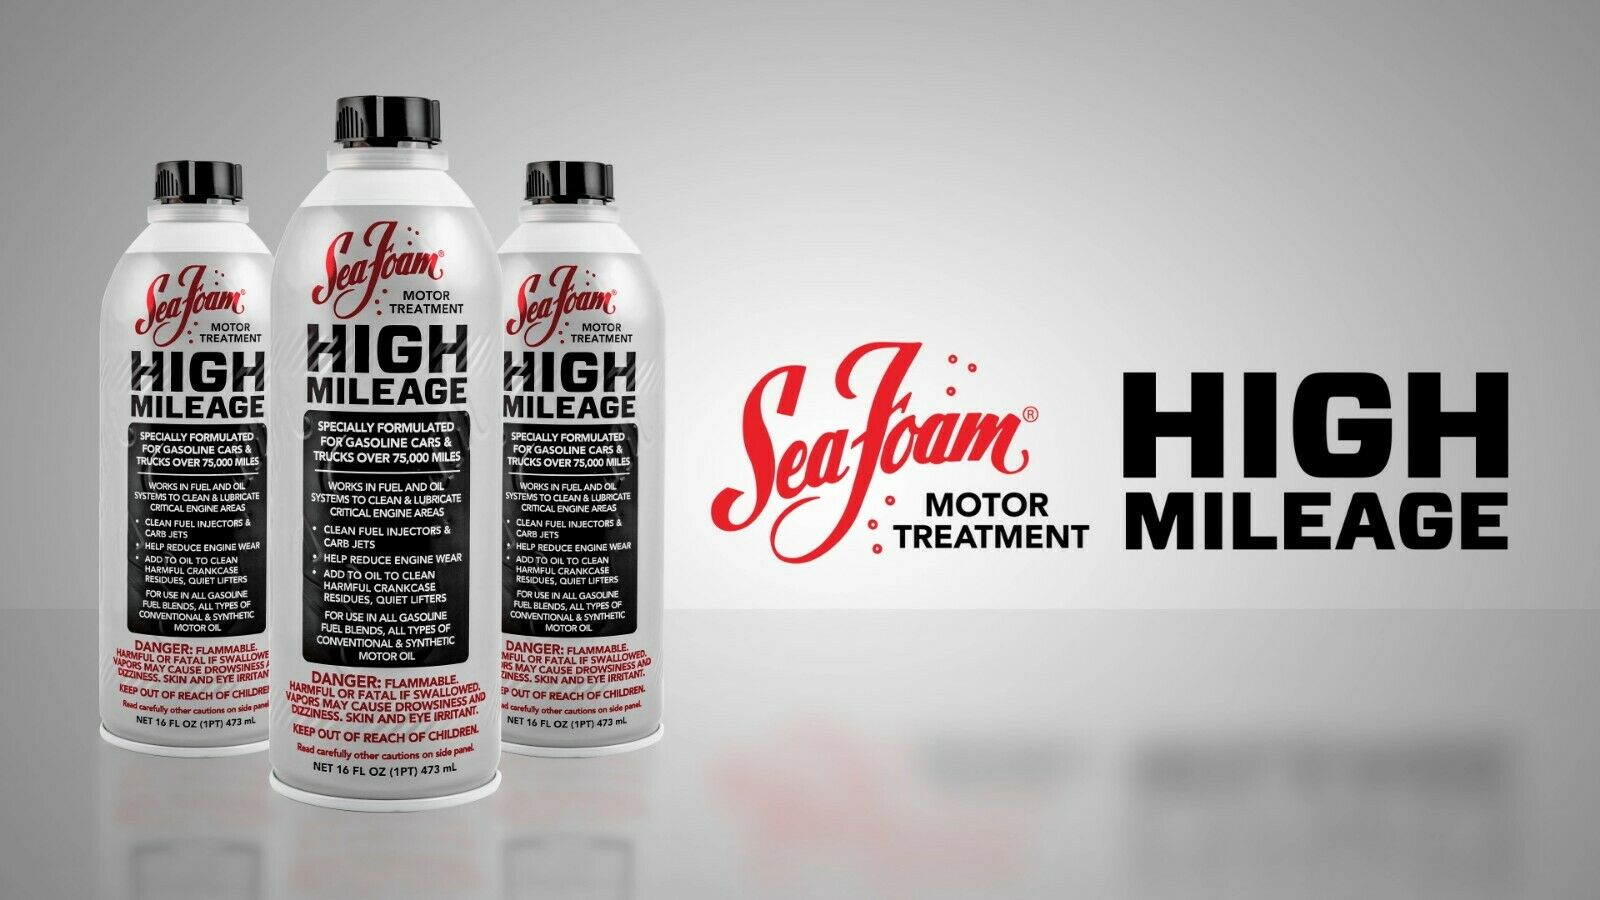 Sea Foam High Mileage 16 oz Motor Treatment